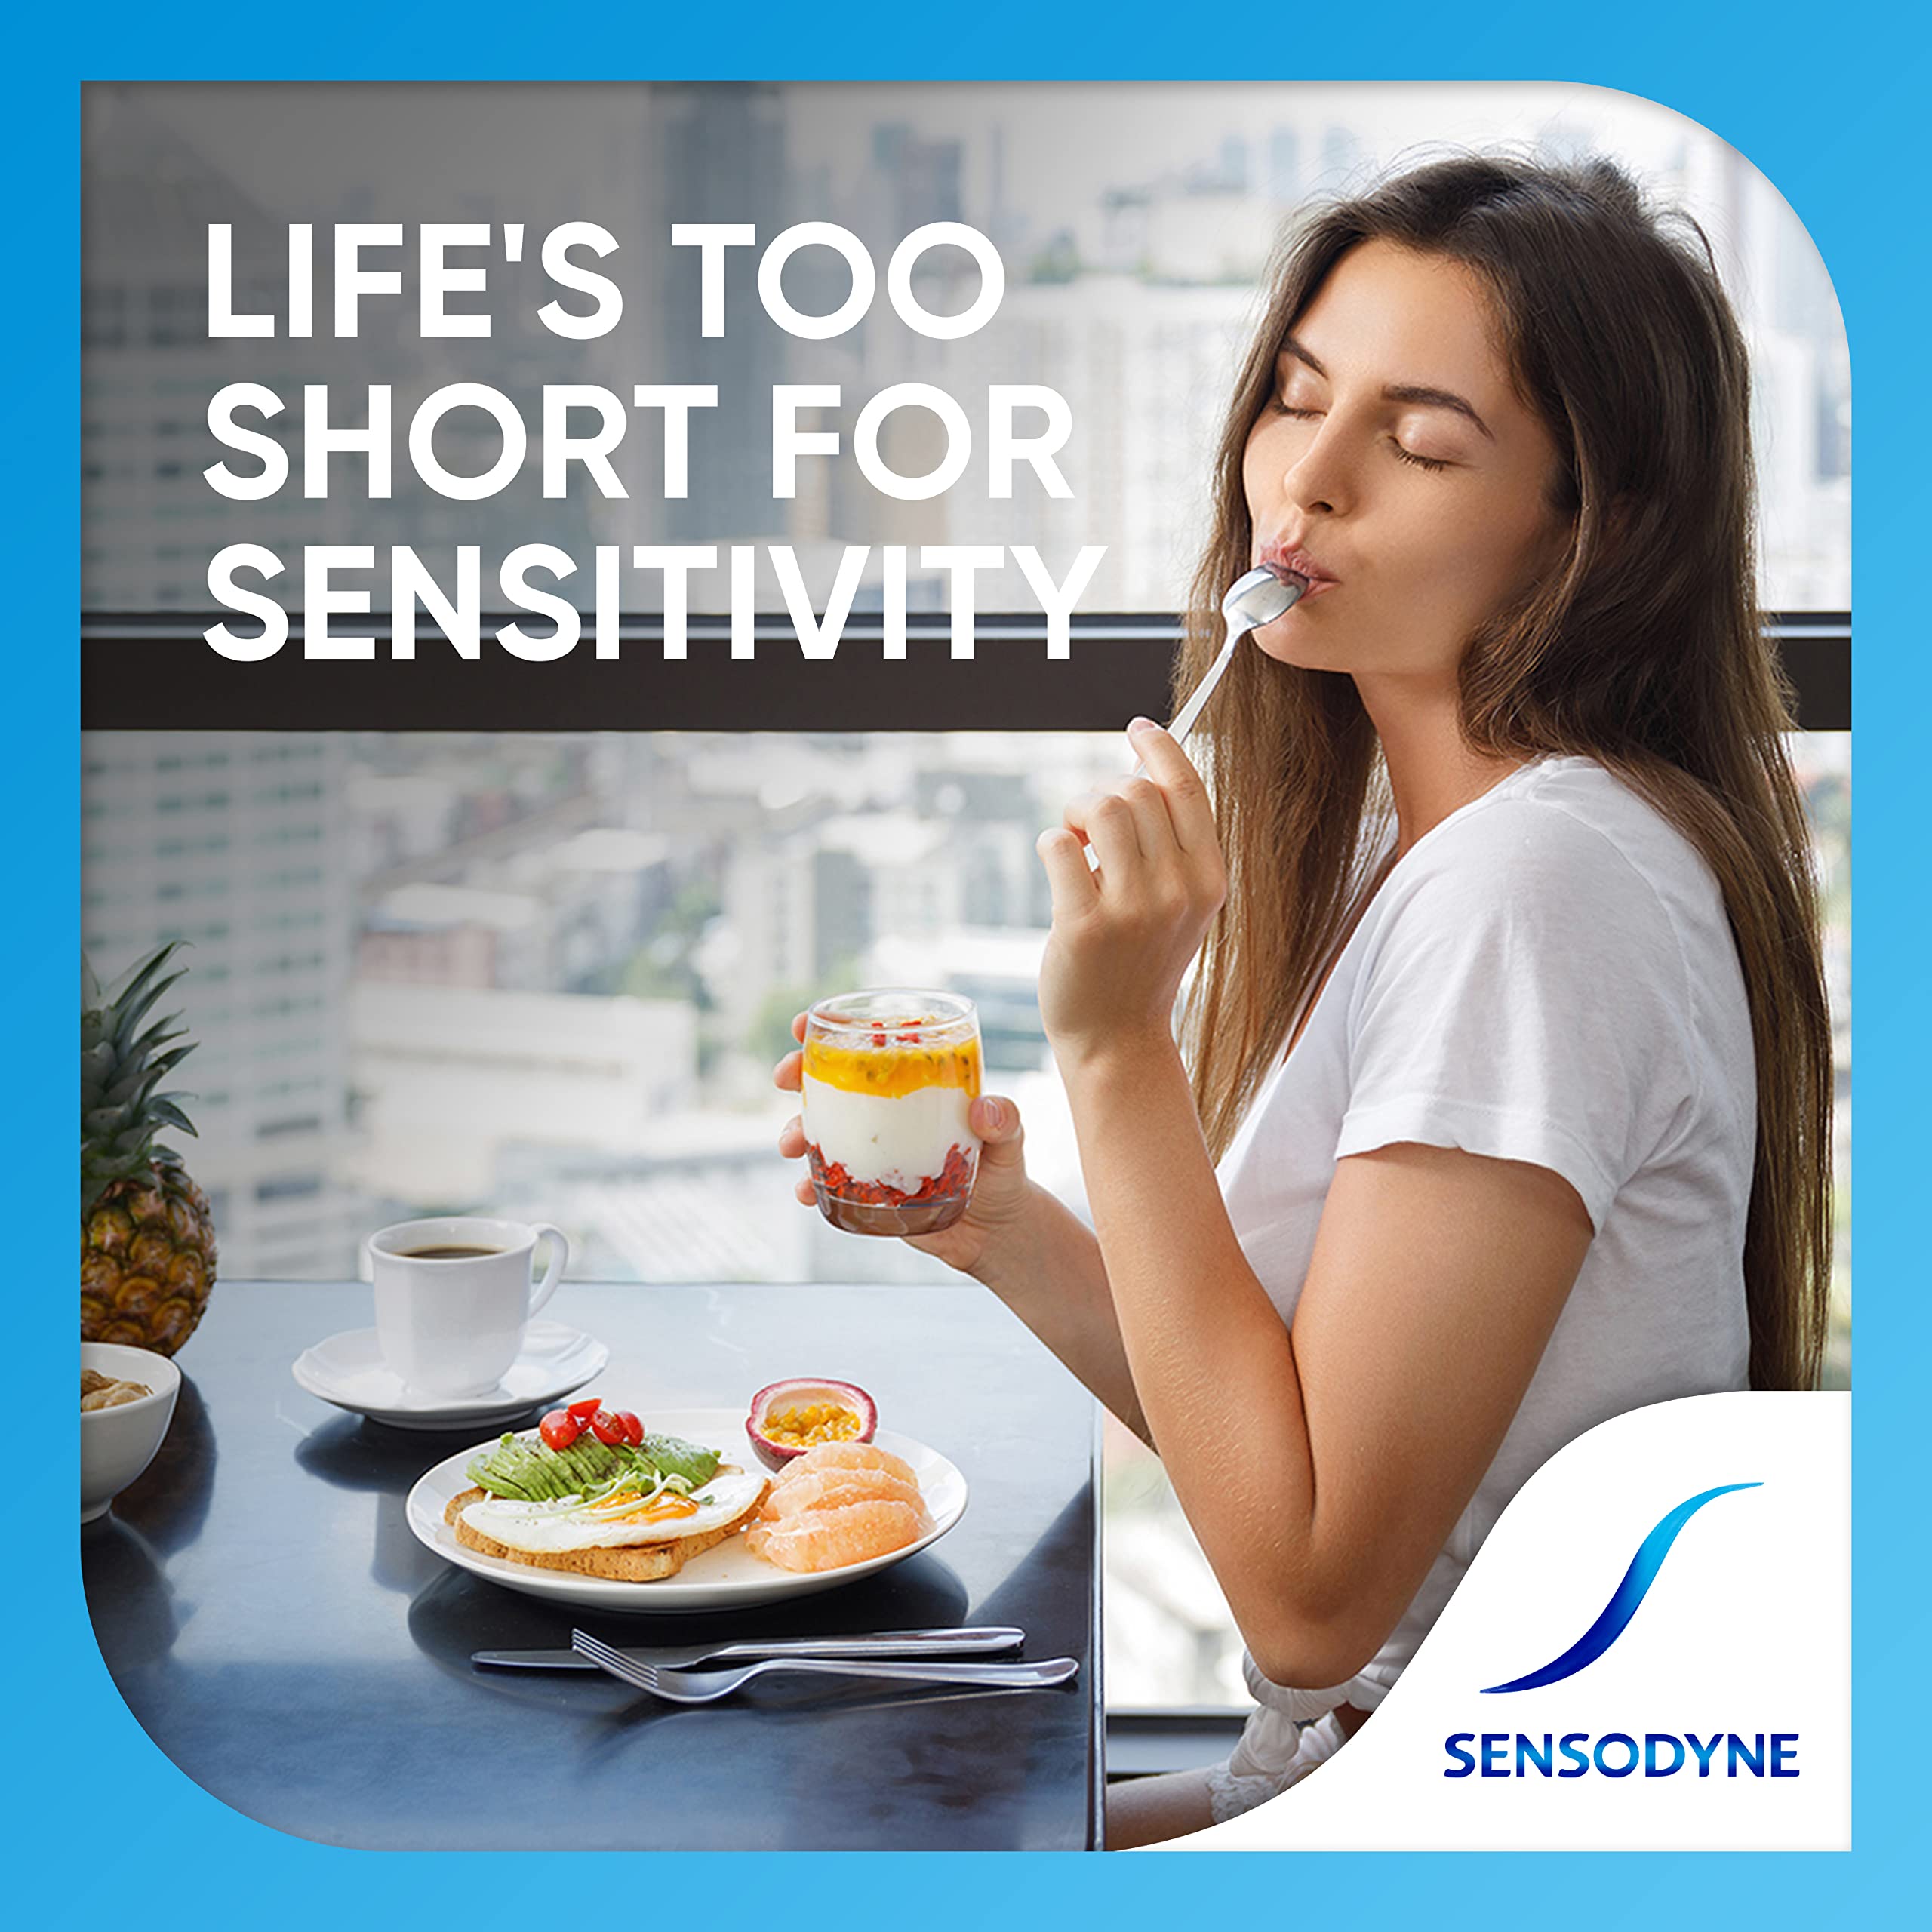 Sensodyne Complete Protection Sensitive Toothpaste for Sensitive Teeth - 3.4oz